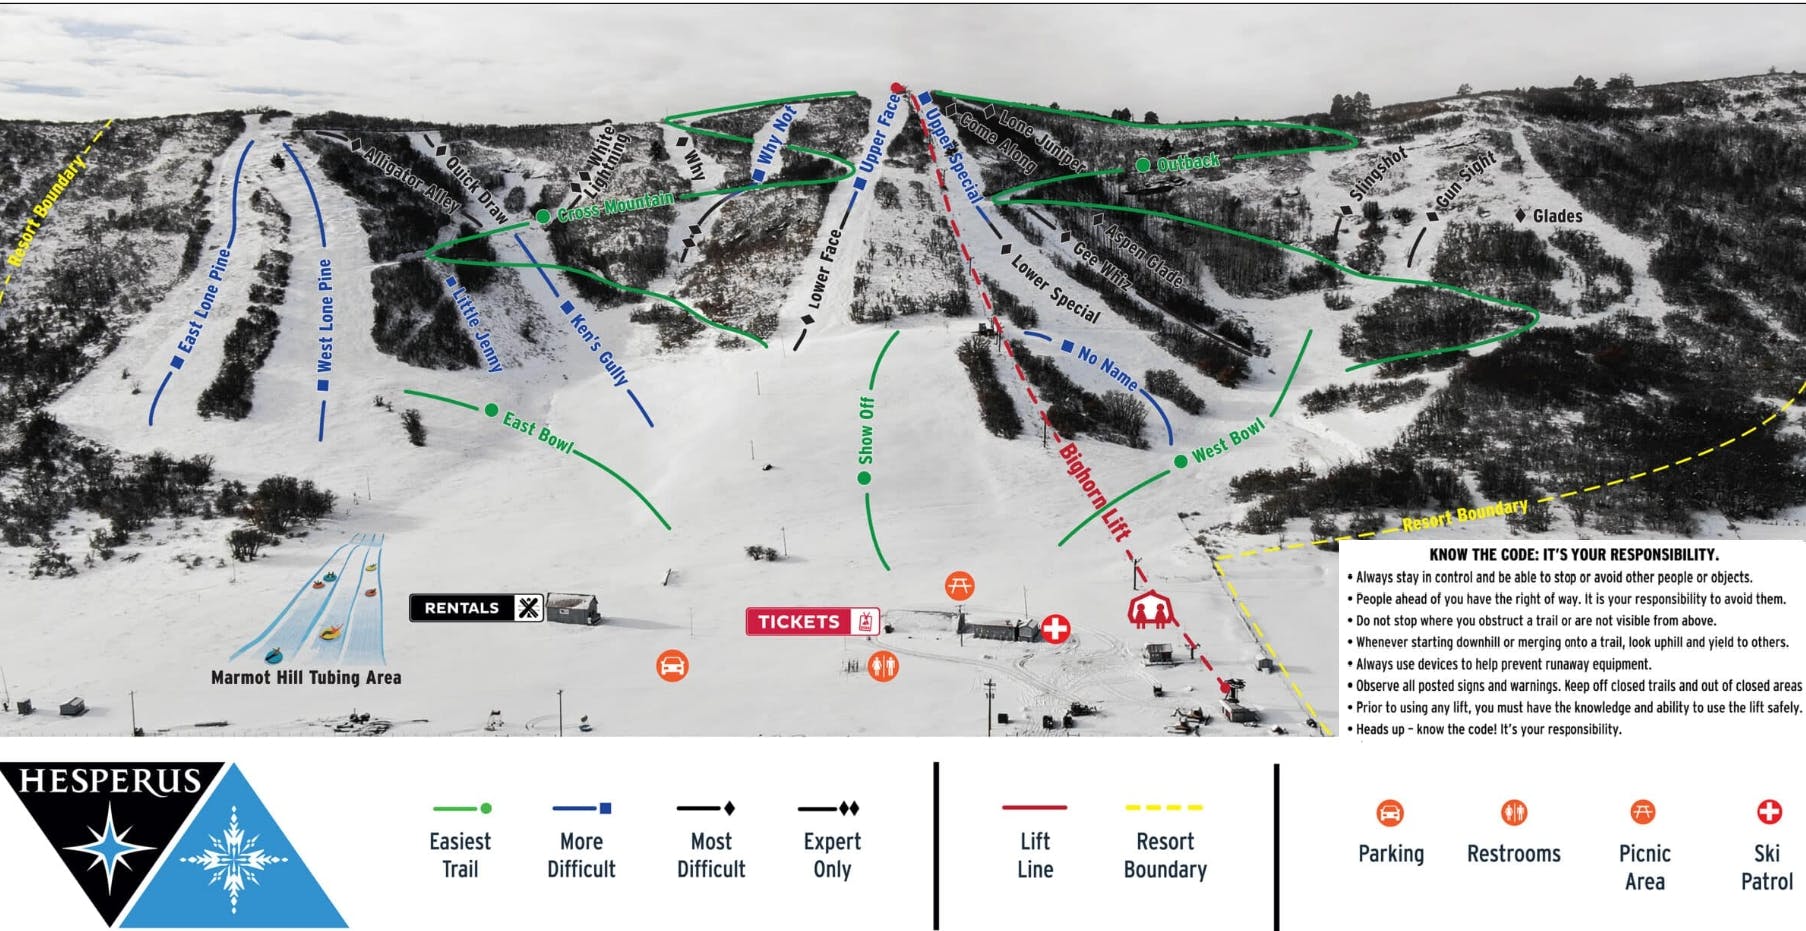 Hesperus Ski Area Trail Map https://www.ski-hesperus.com/wp-content/uploads/2023/01/Hesperus-Trail-Map-Updated-scaled.jpg 